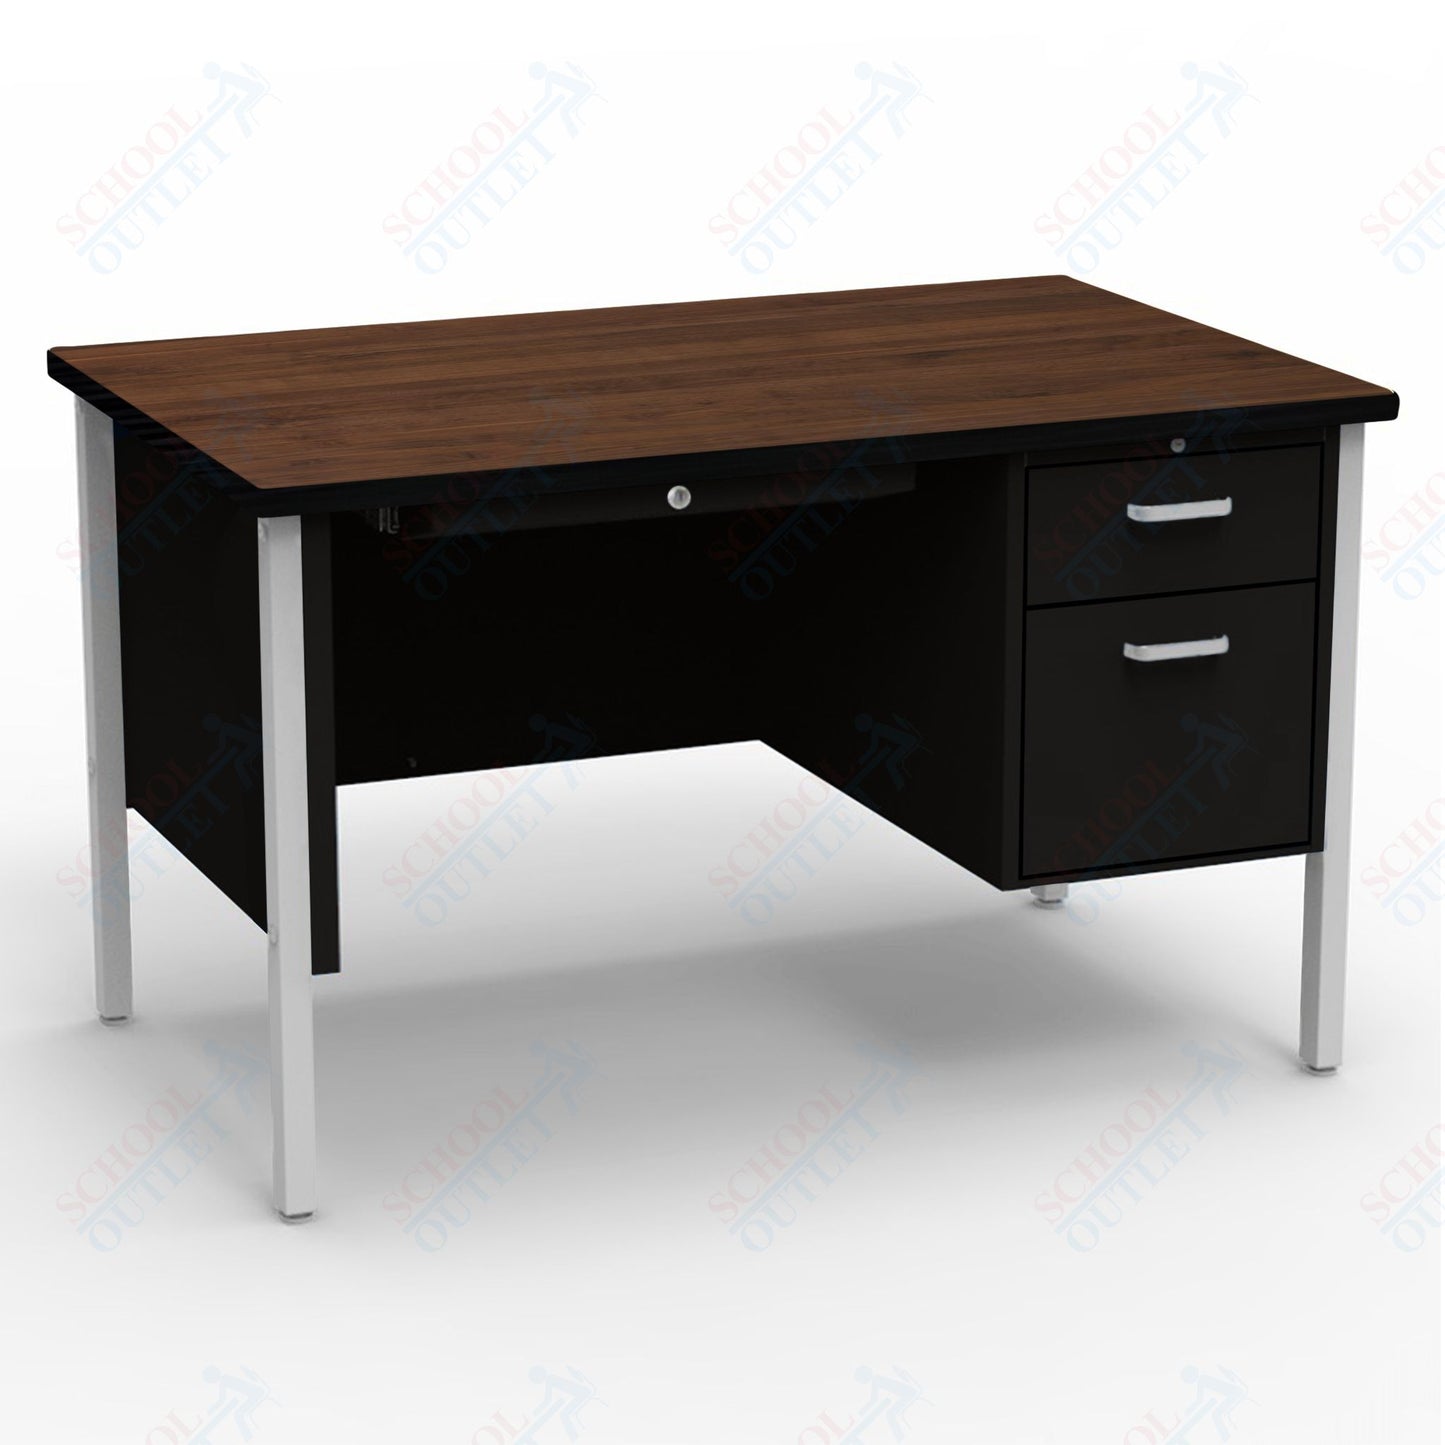 Virco 643 Single Pedestal Teacher Desk - 640 Series with a 30"D x 48"L High-pressure Laminate Surface